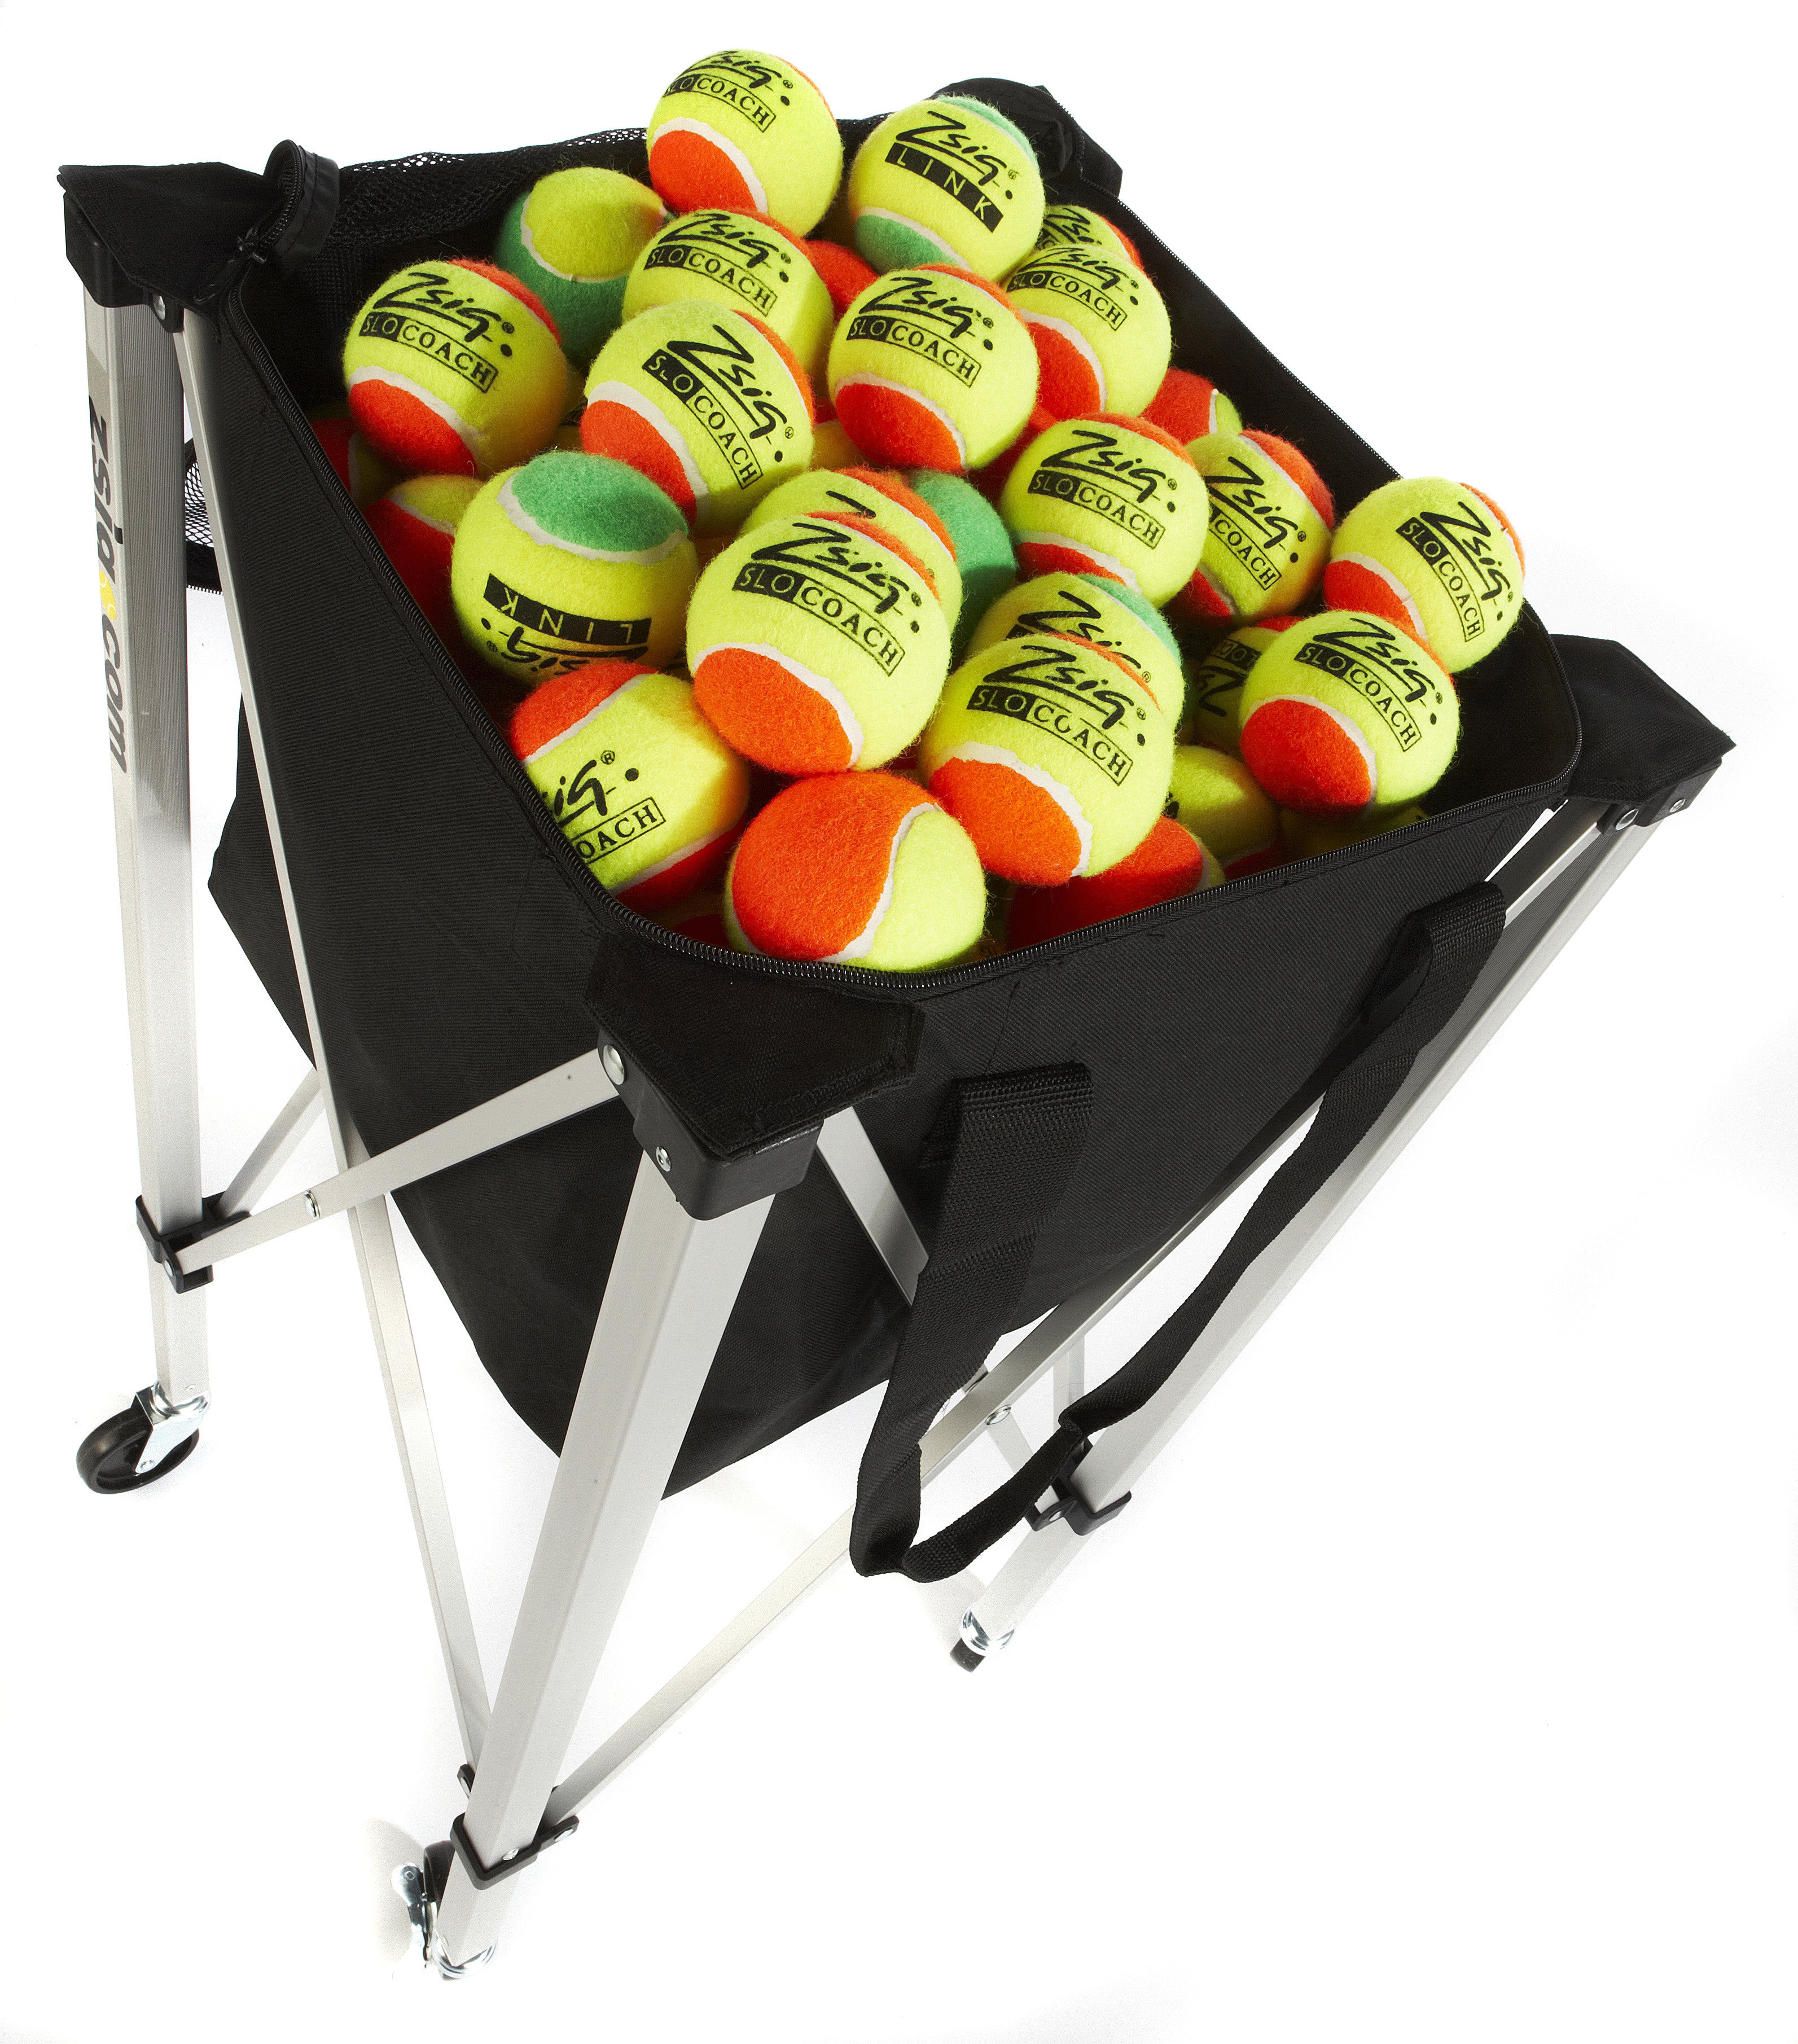 Zsig's Pro Coach Mini Compact Cart holding 144 tennis balls